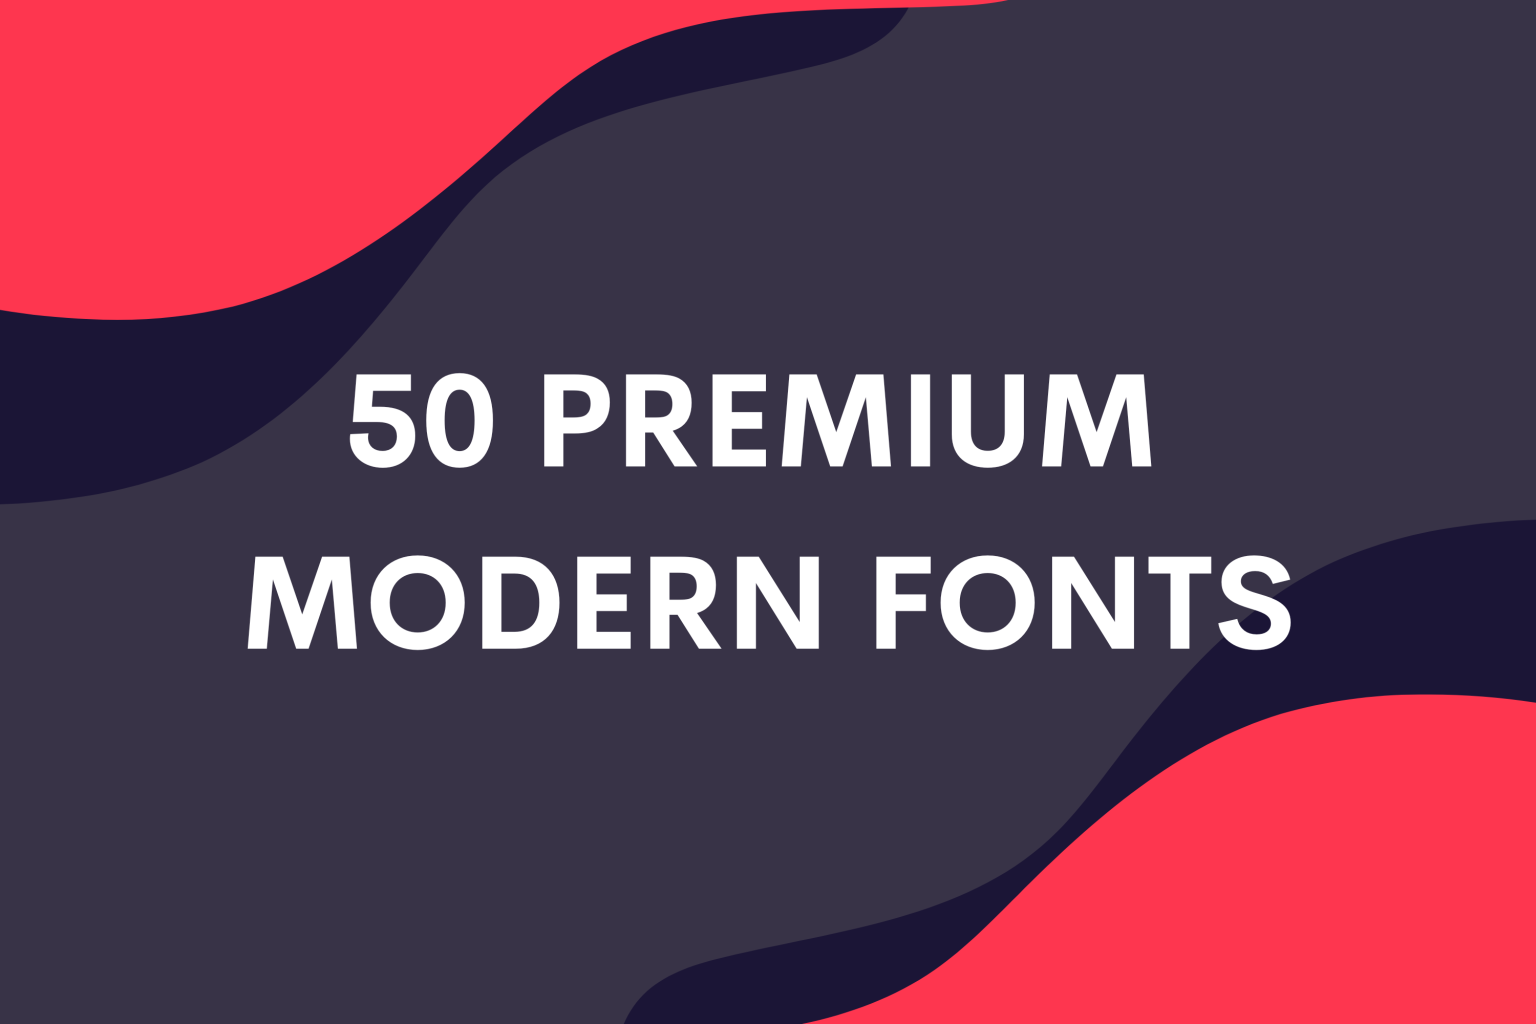 50 Premium Modern Fonts